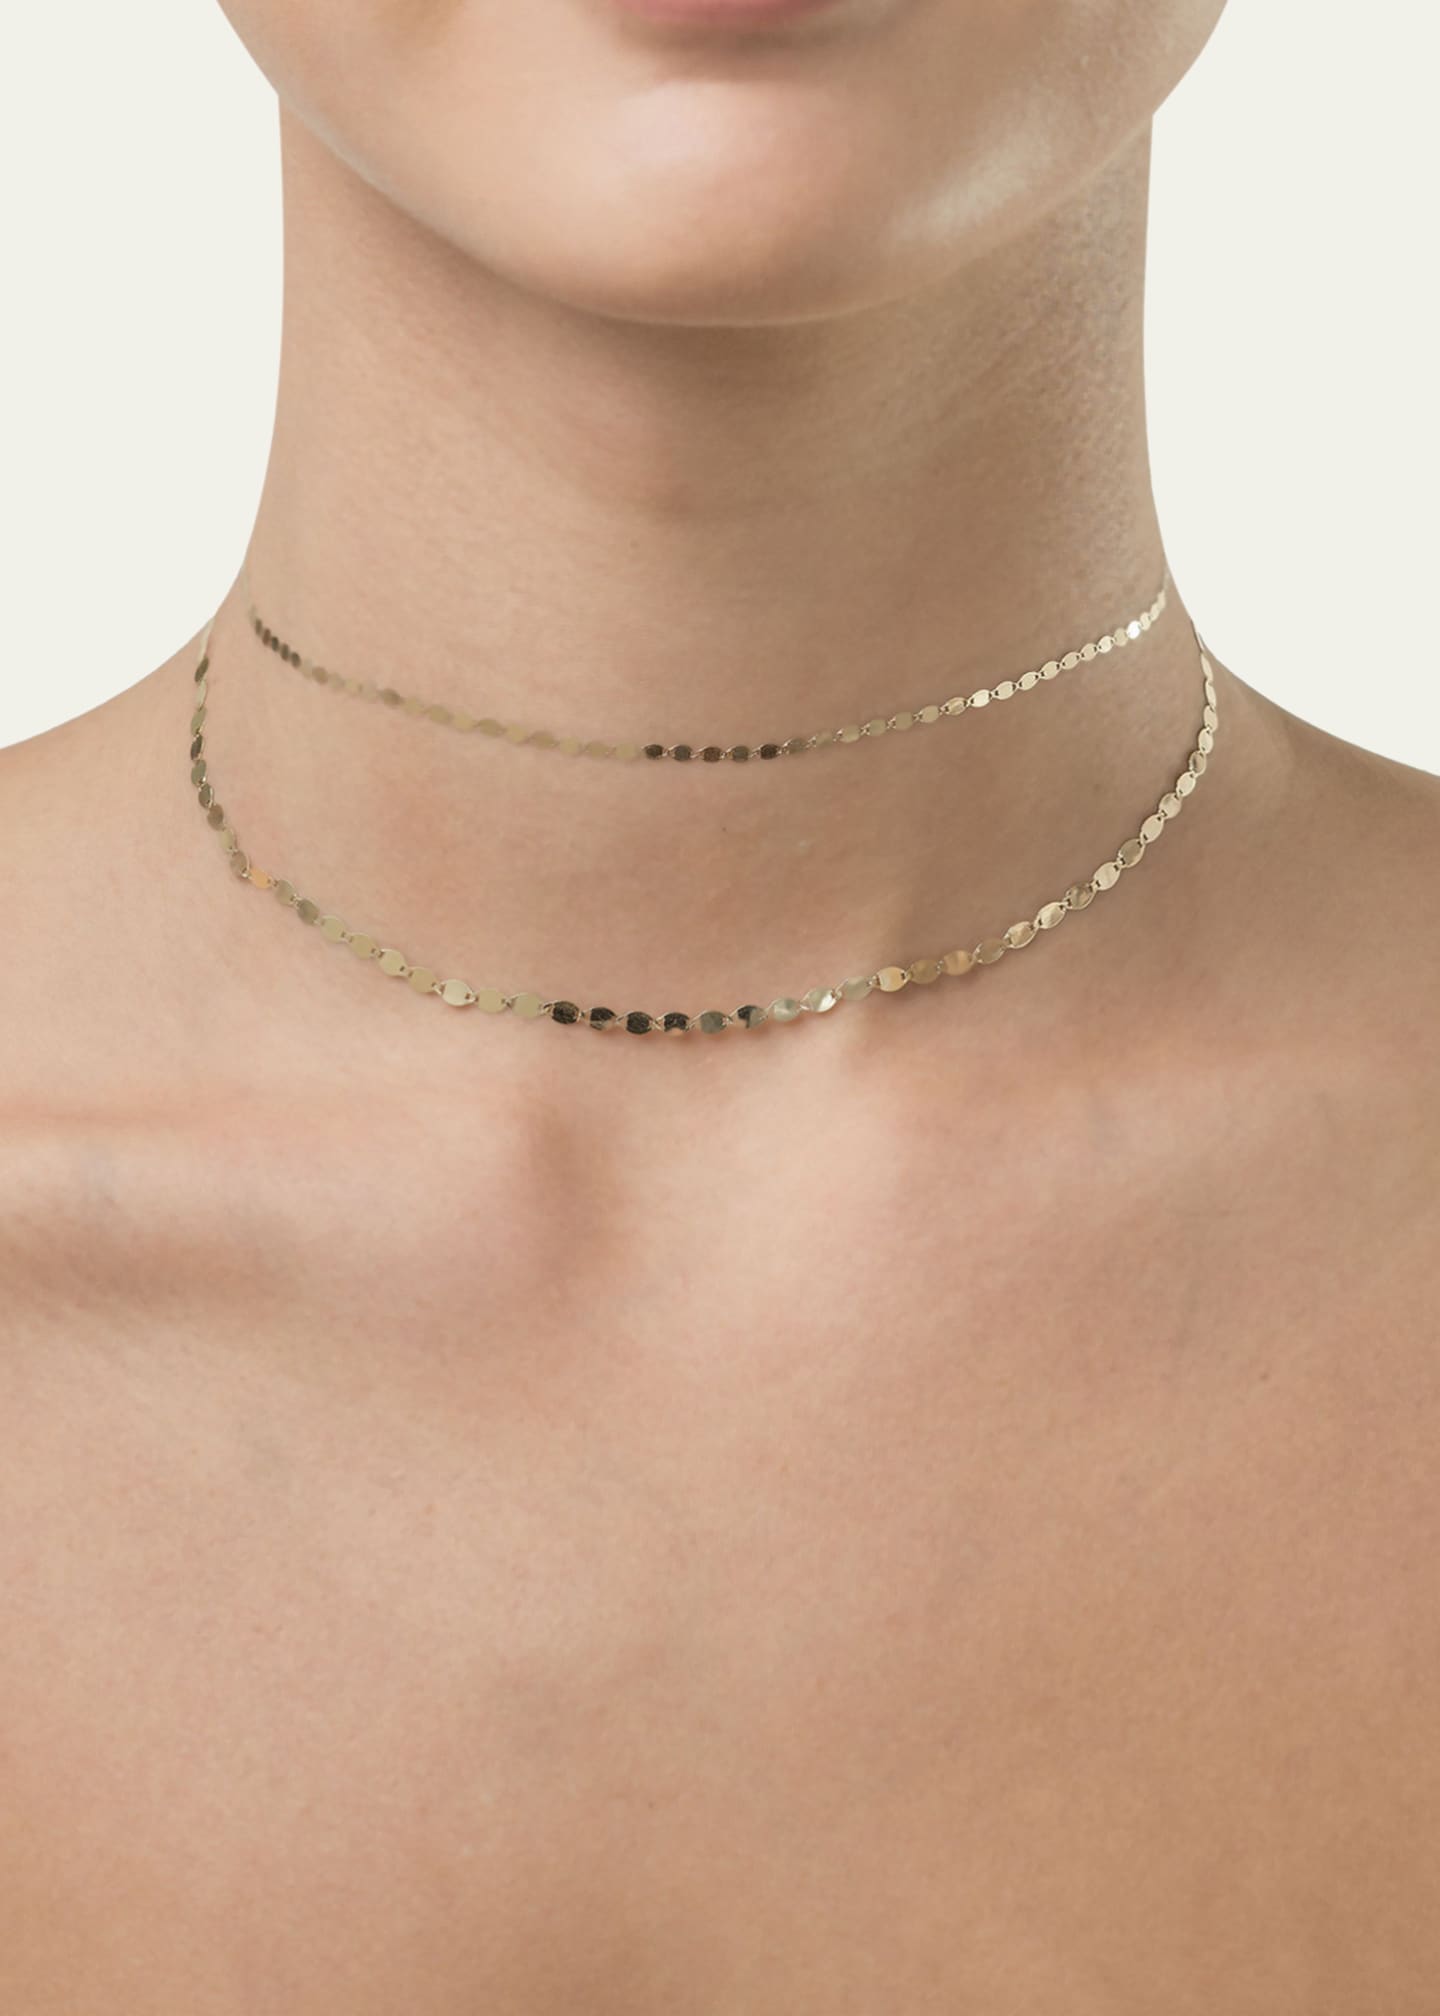 Lana Nude Solo Zipper Necklace